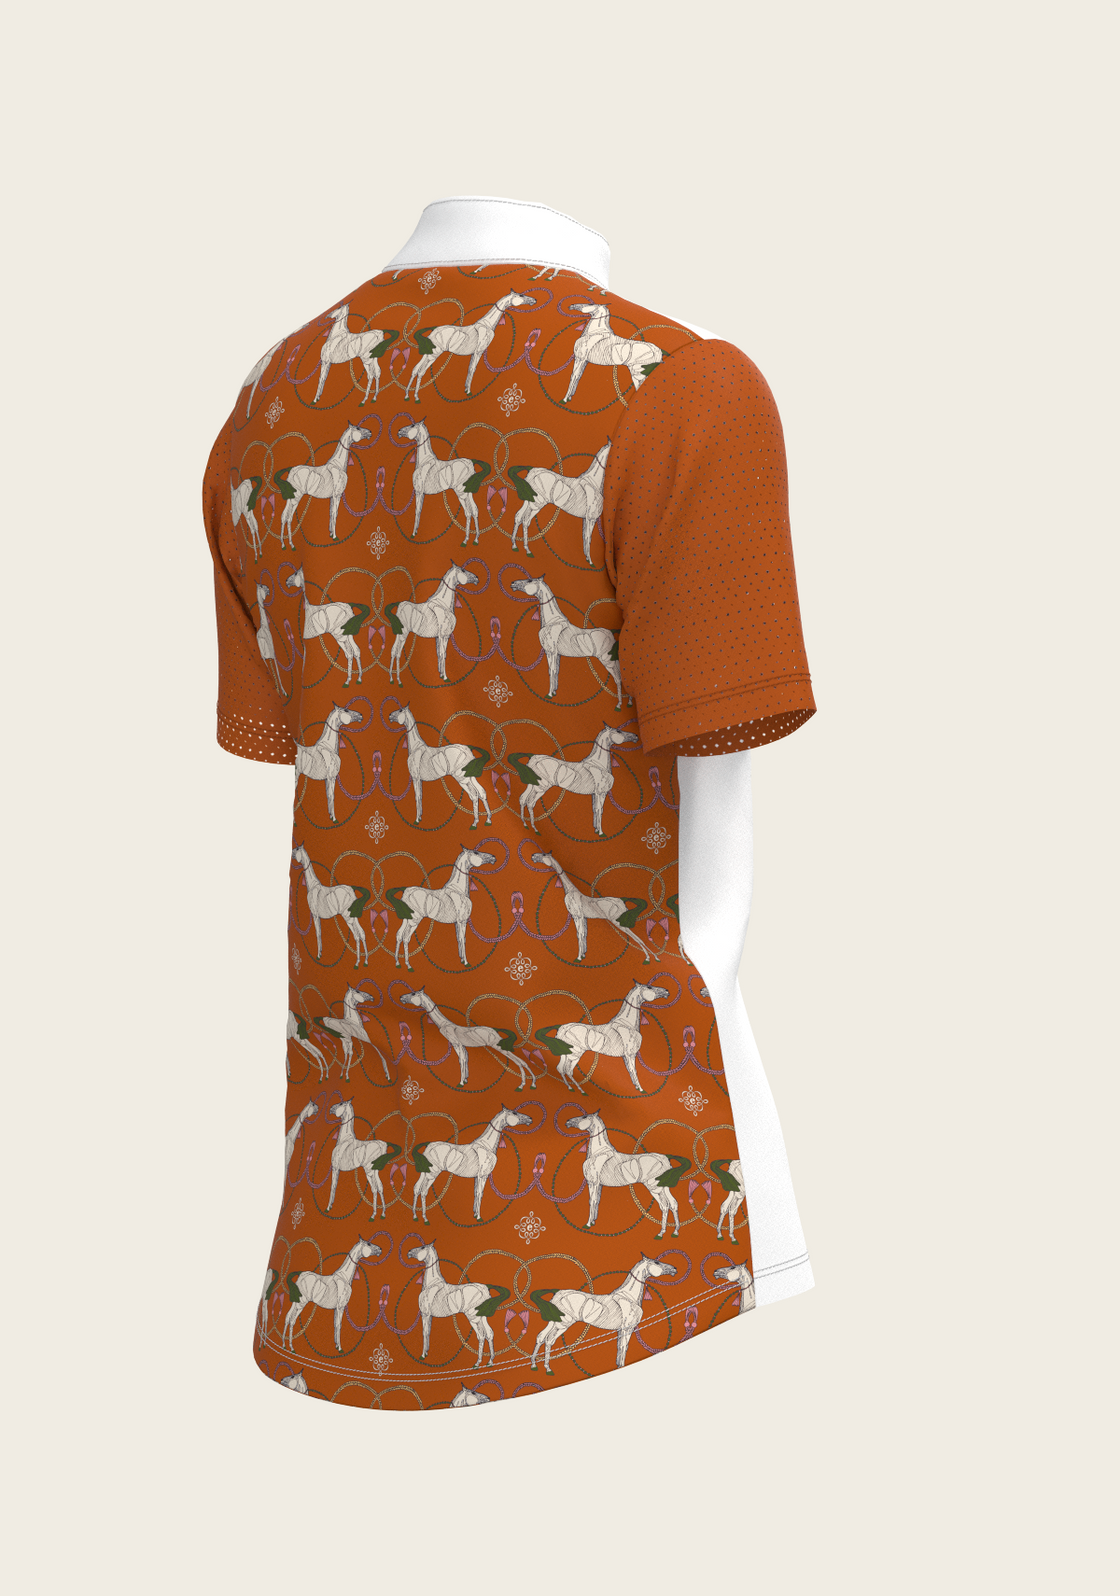 Roped Horses on Tan Short Sleeve Show Shirt